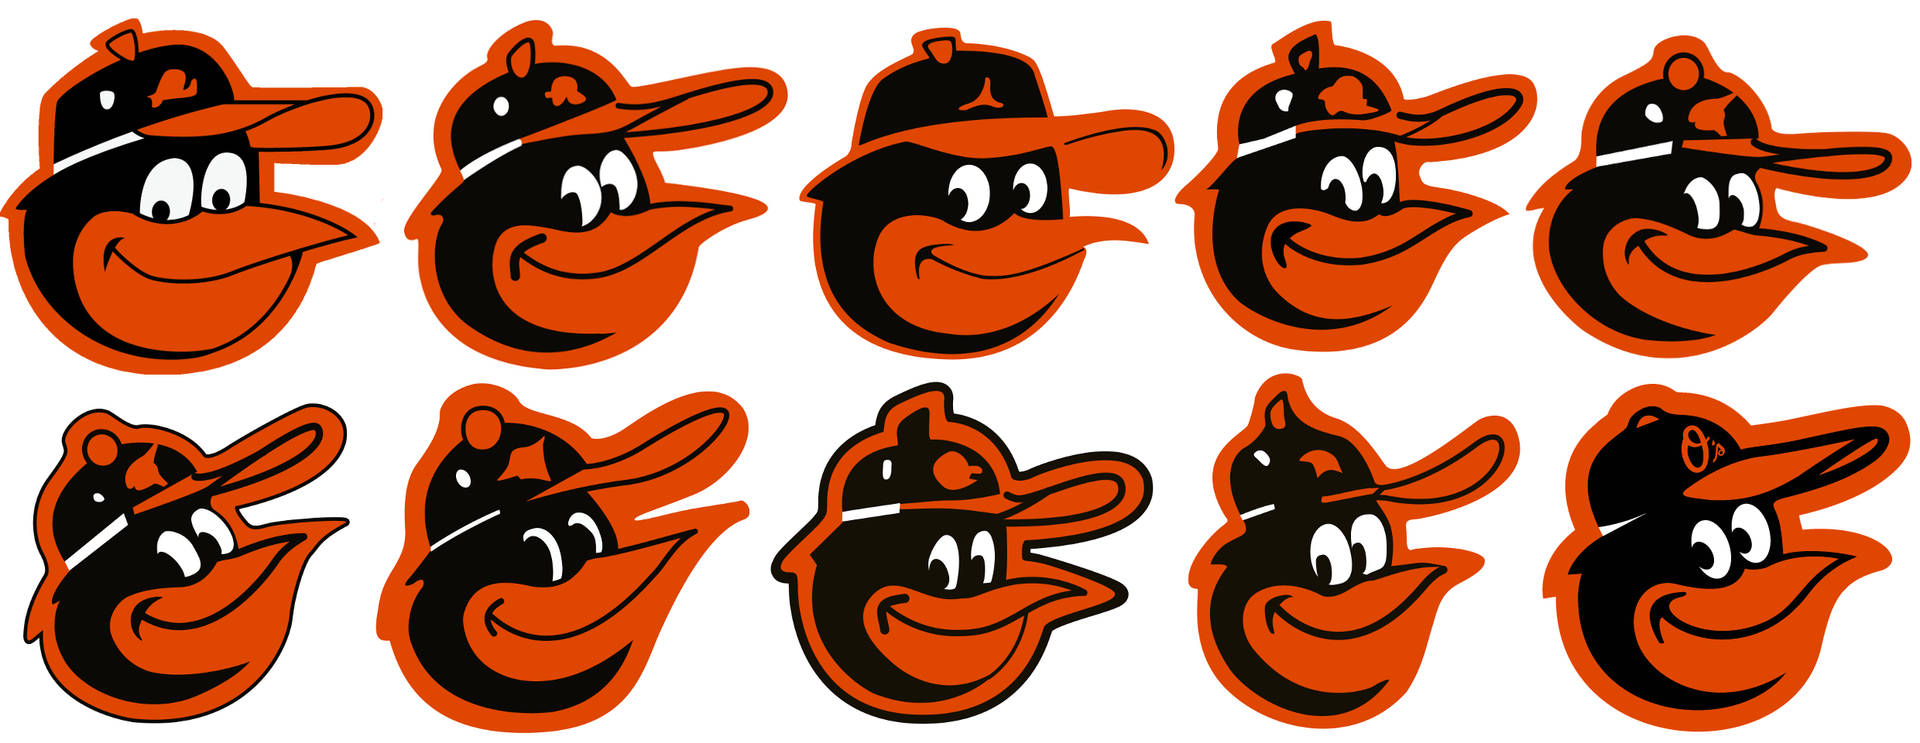 Baltimore Orioles Bird Mascot Logo In Vibrant Colors Background